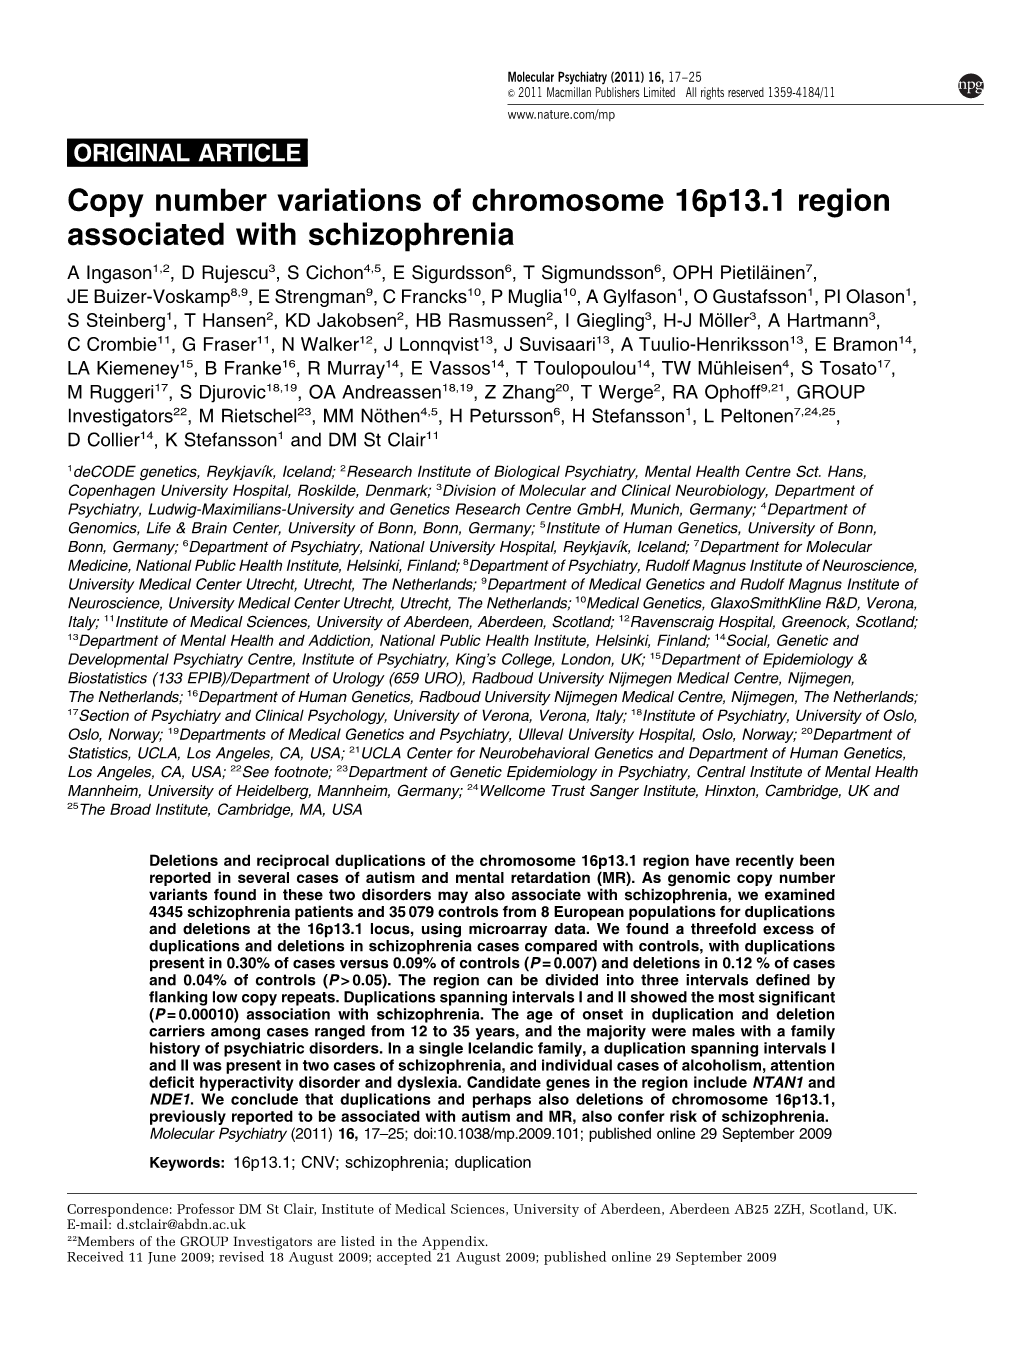 Copy Number Variations of Chromosome 16P13.1 Region